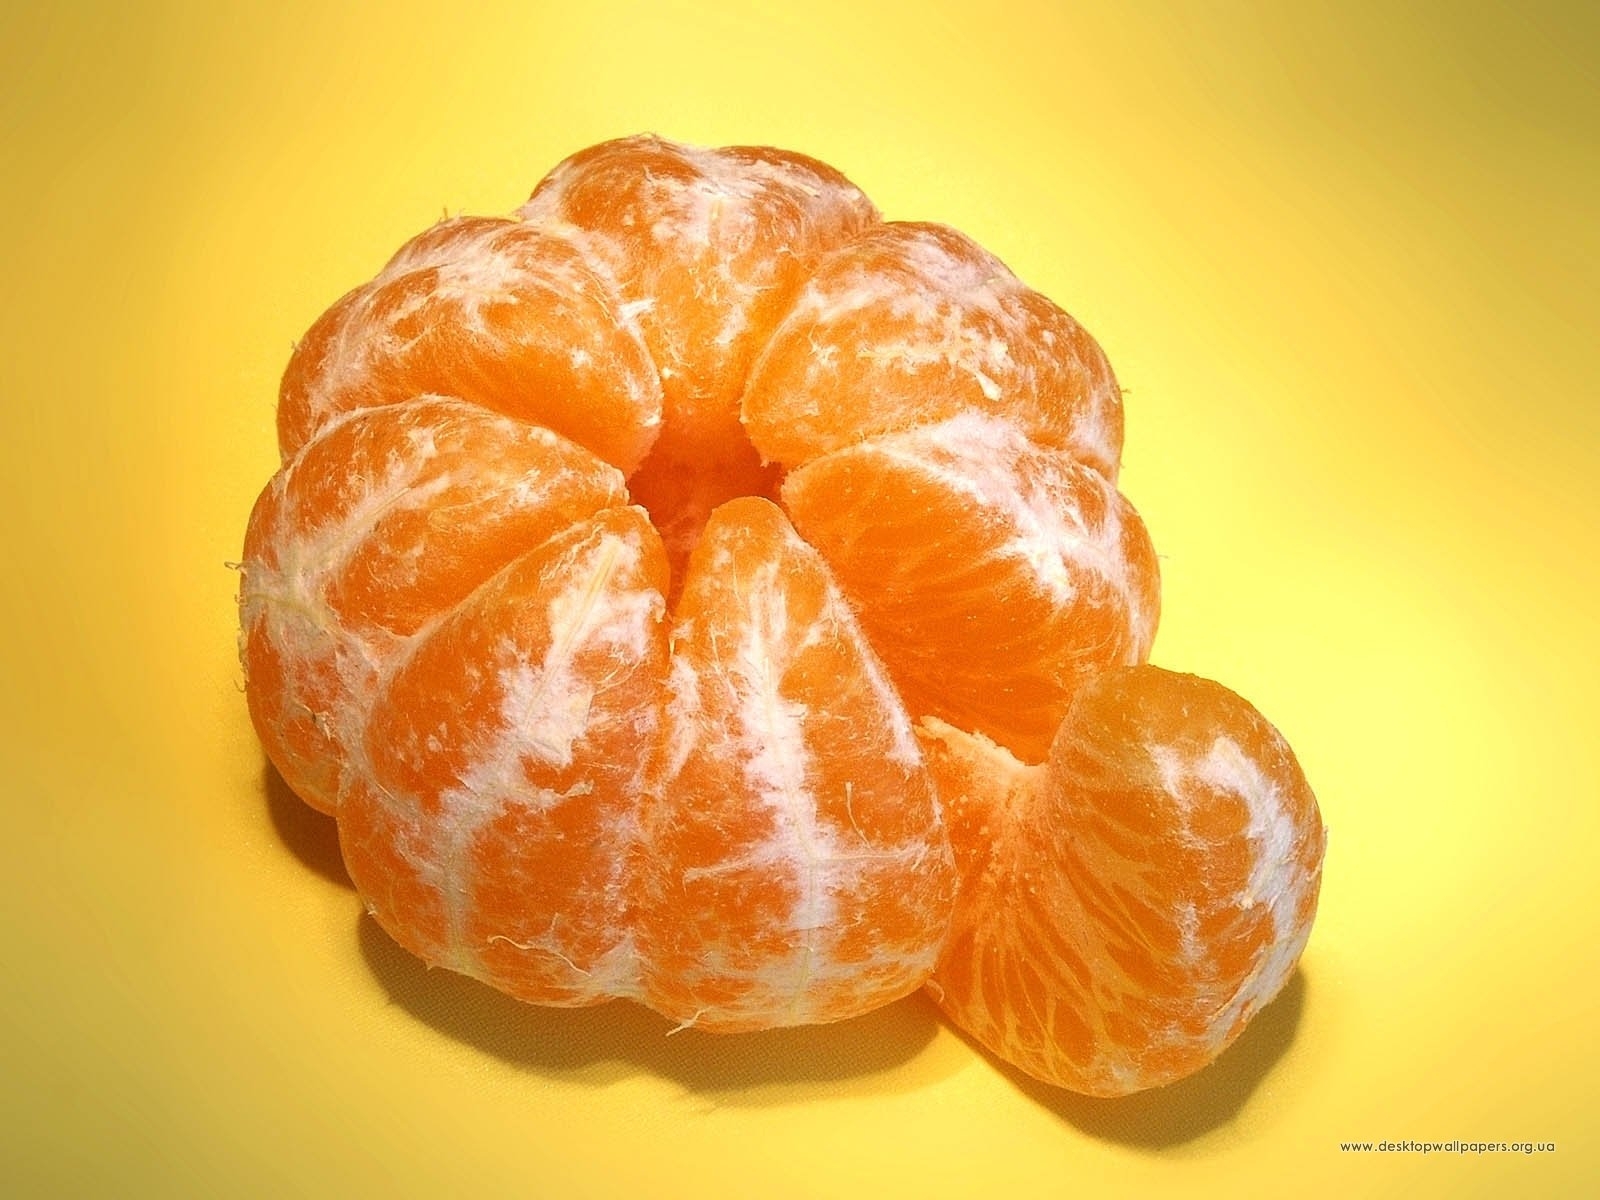 fruits, food, tangerines, orange